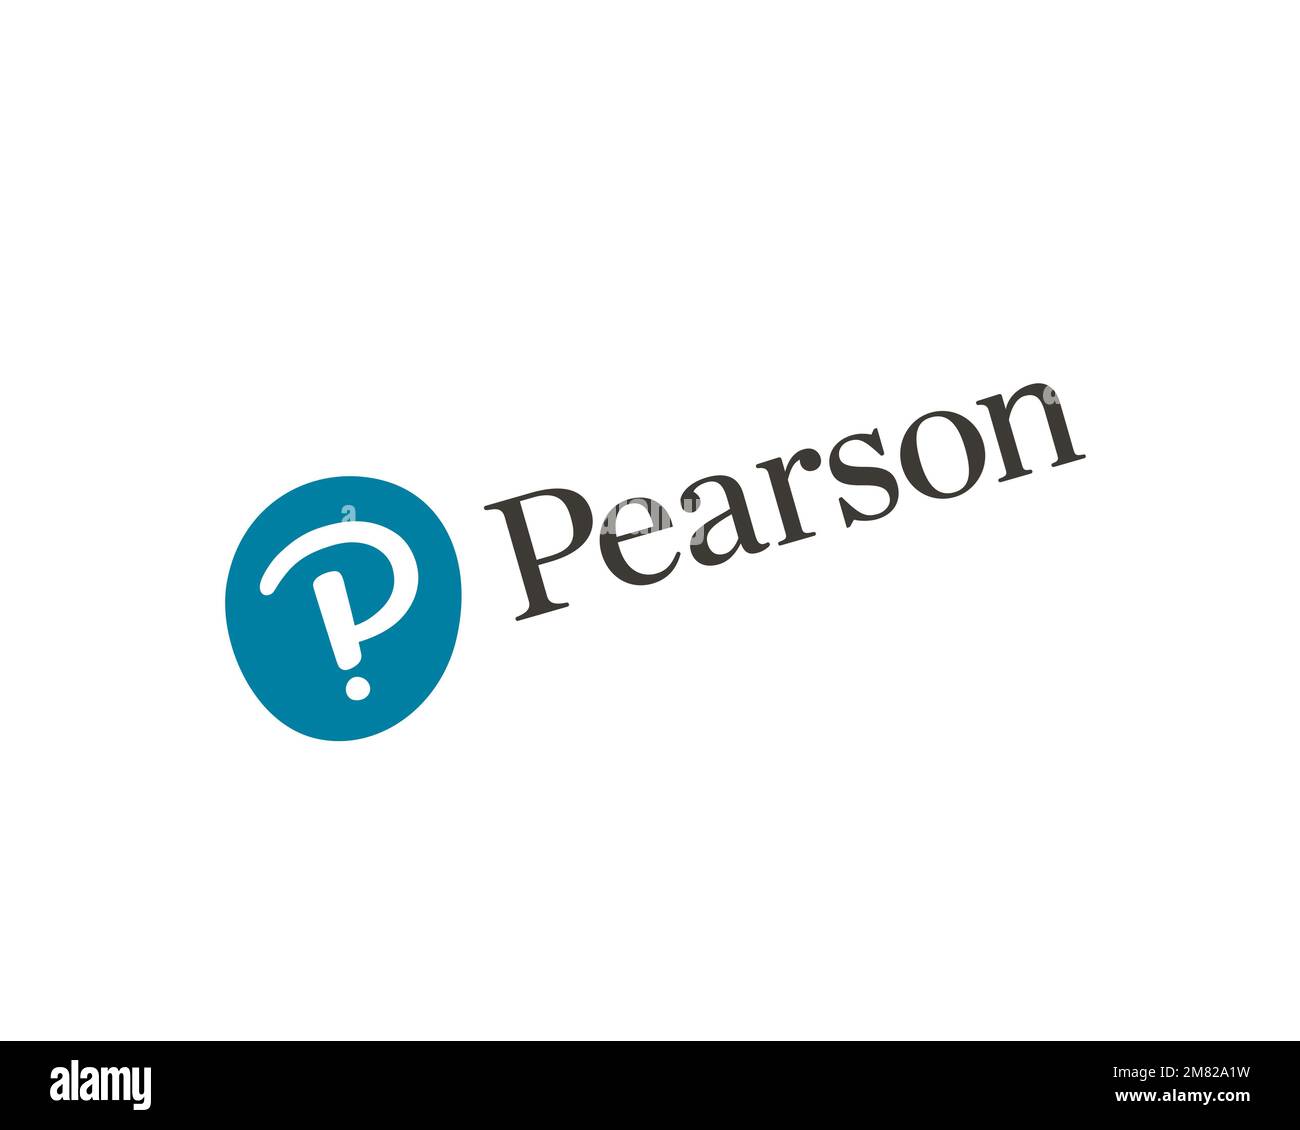 Pearson plc, logo ruotato, sfondo bianco Foto Stock